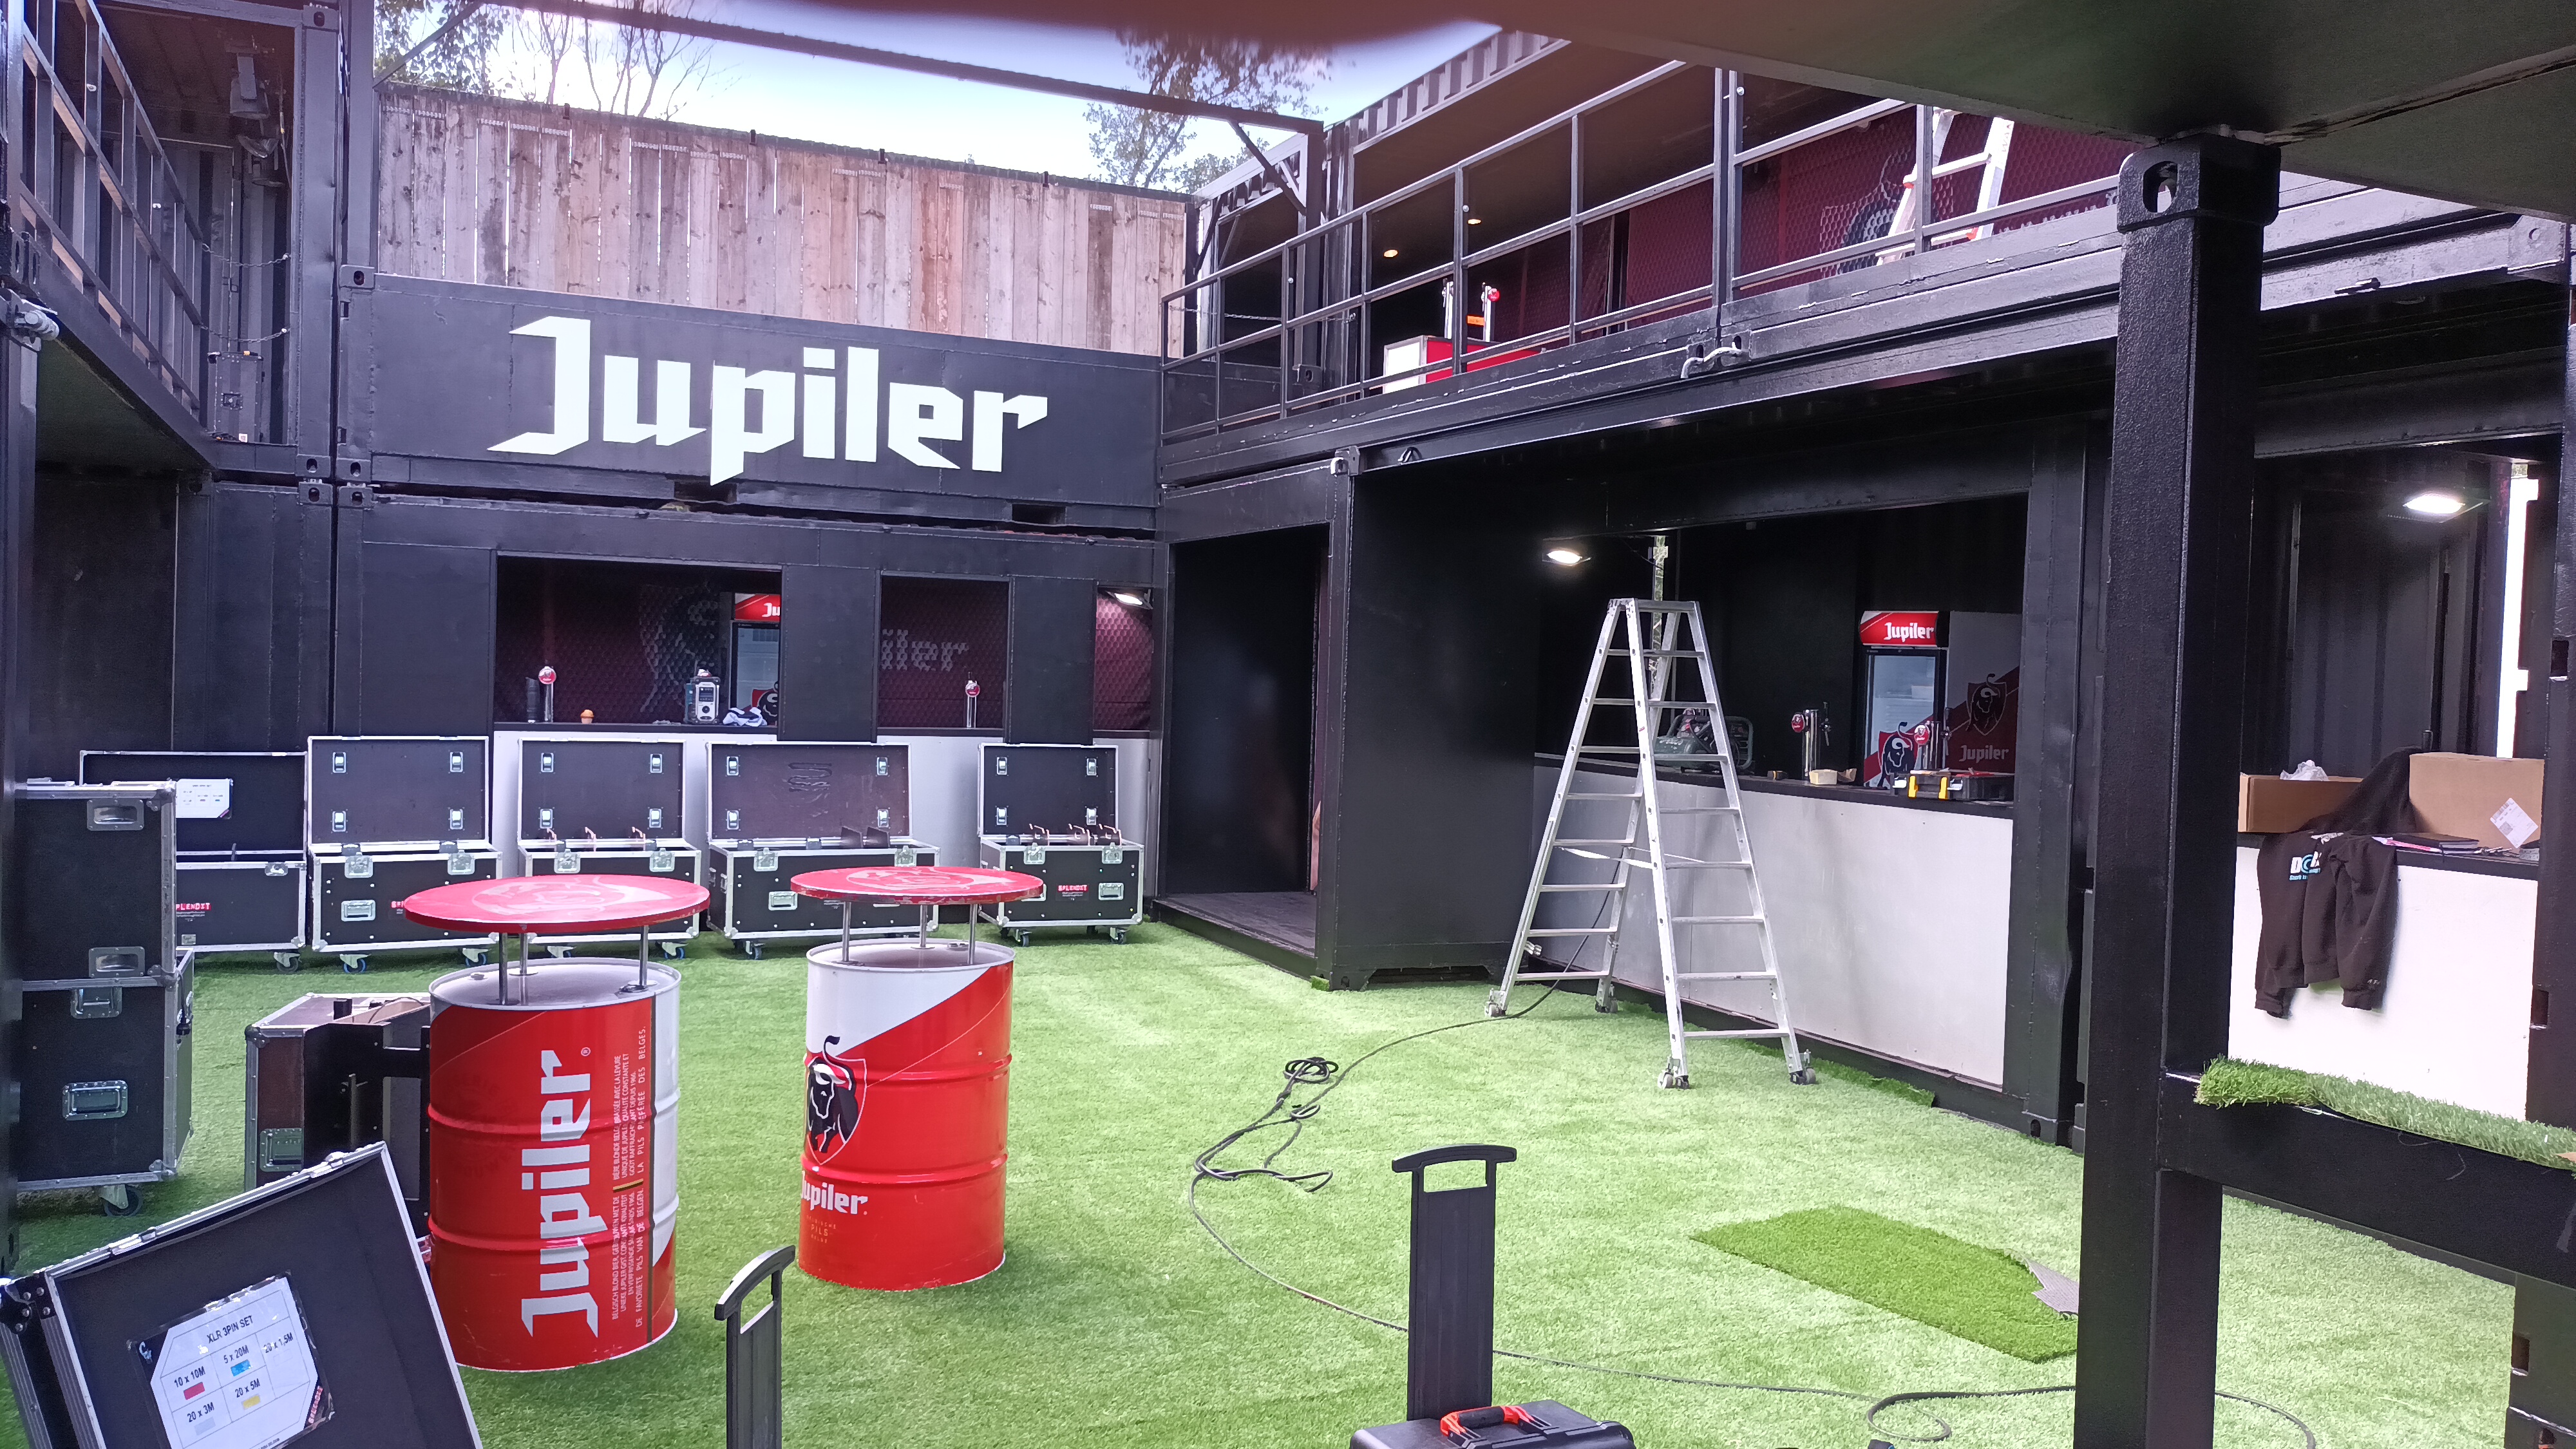 28-06-2022 - Tomorrowland - Jupiler stand